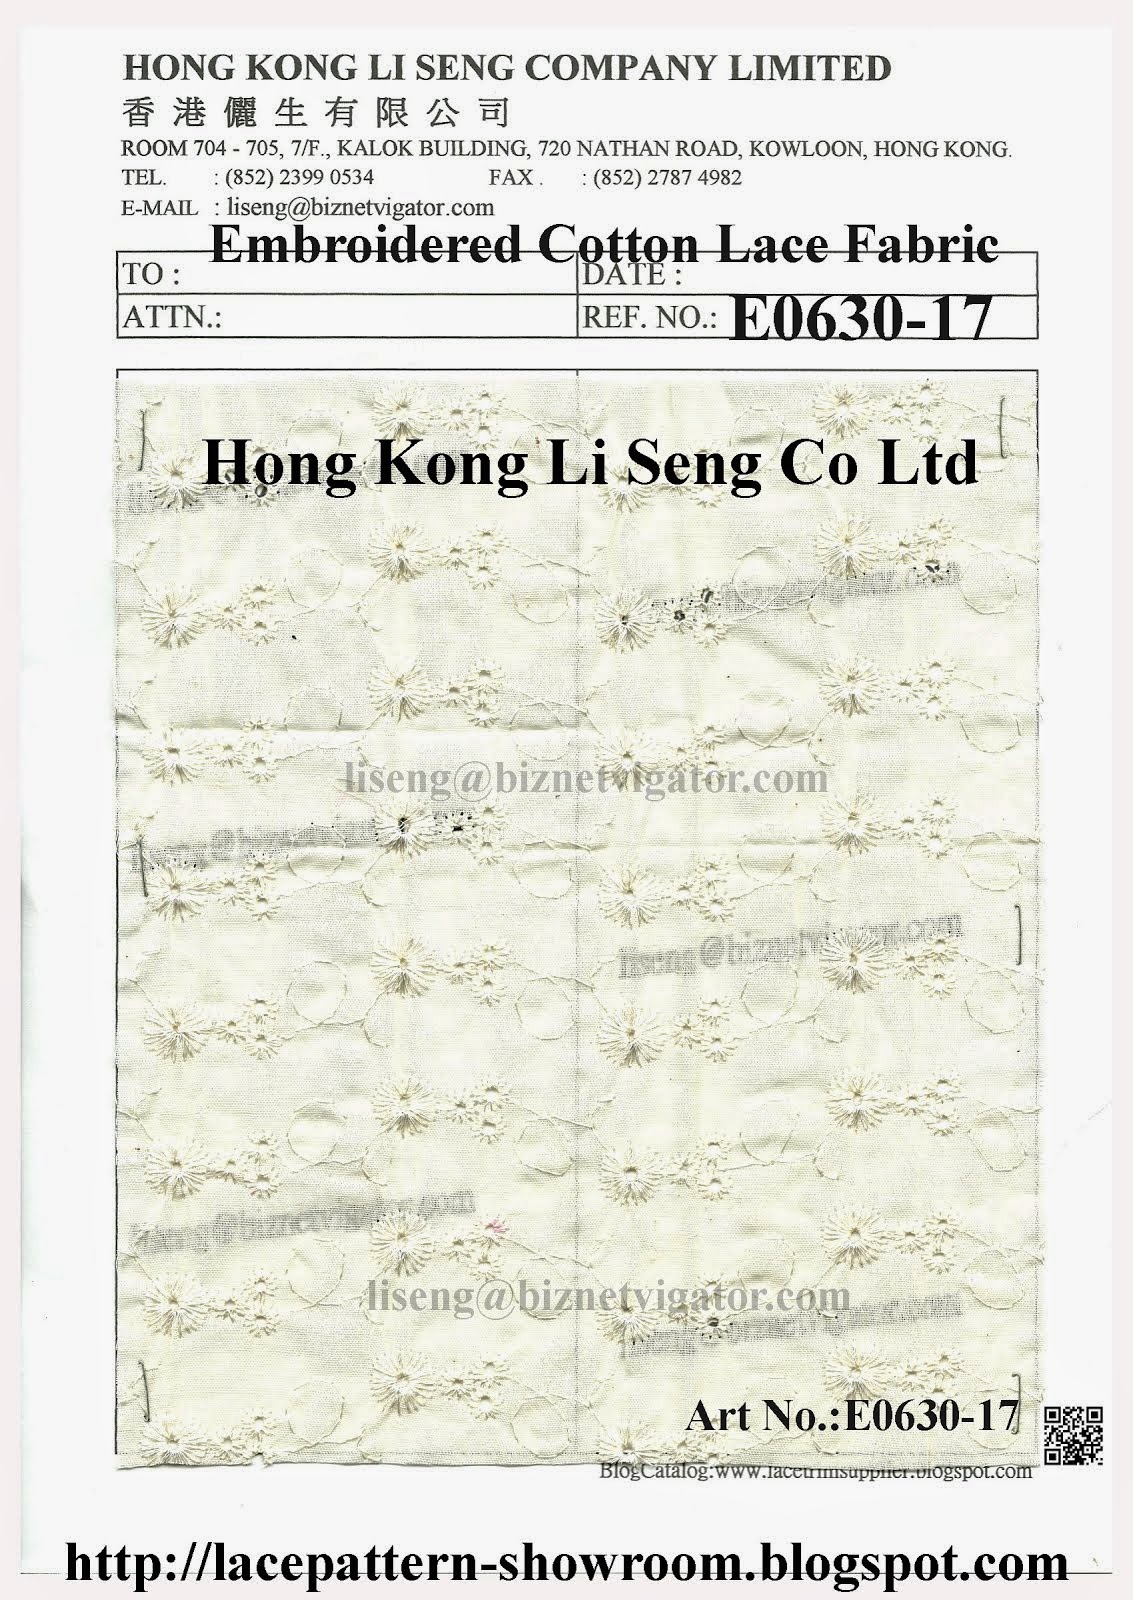 Embroidered Cotton Lace Fabric Manufacturer Wholesaler and Supplier - Hong Kong Li Seng Co Ltd